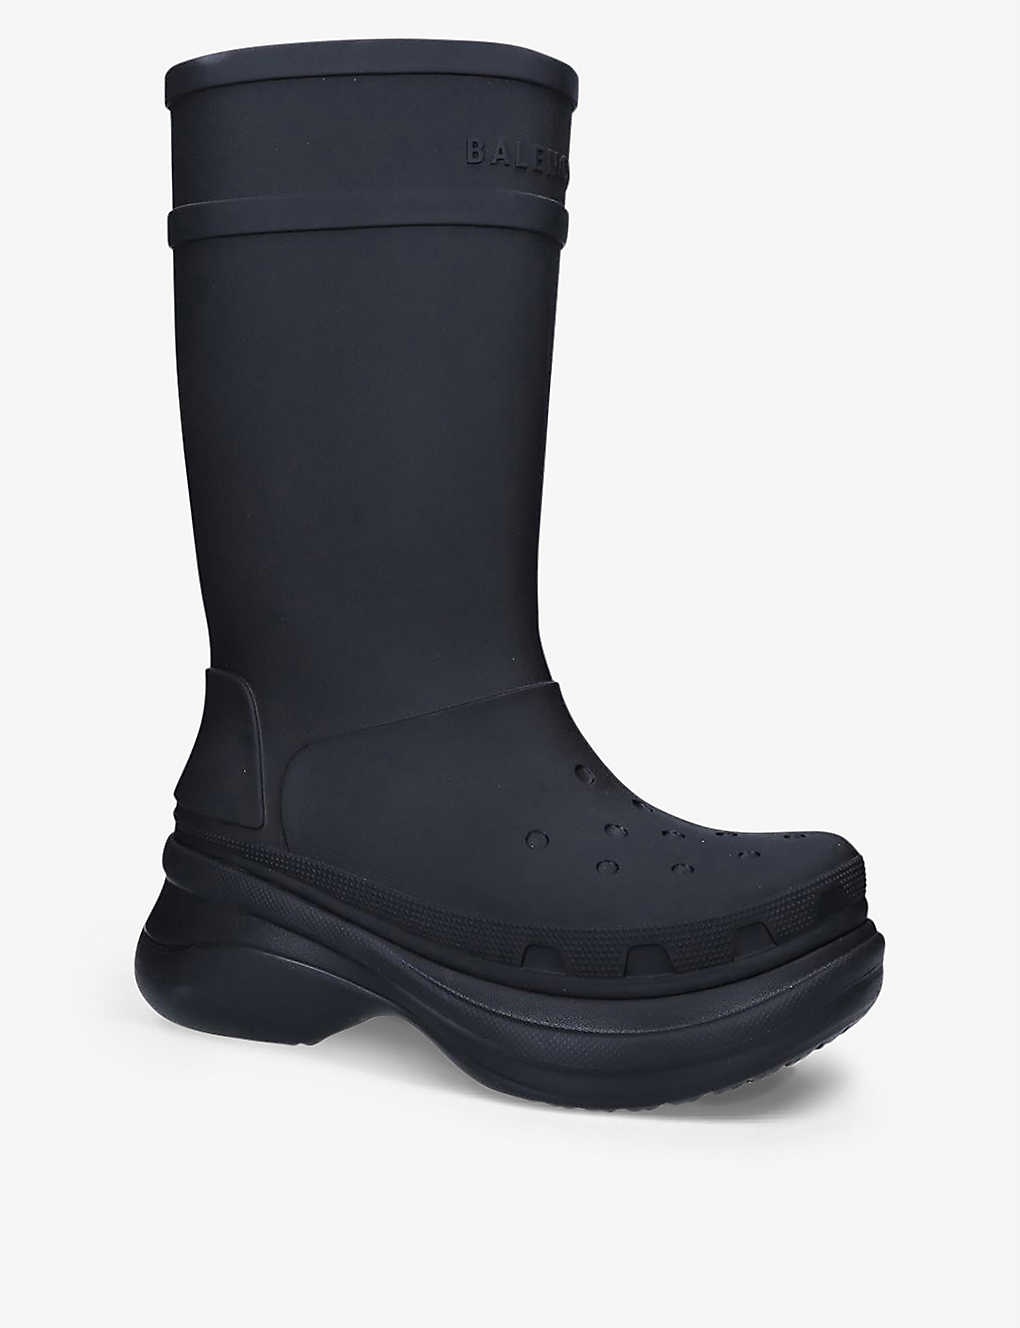 Balenciaga x Crocs chunky rubber boots - 3